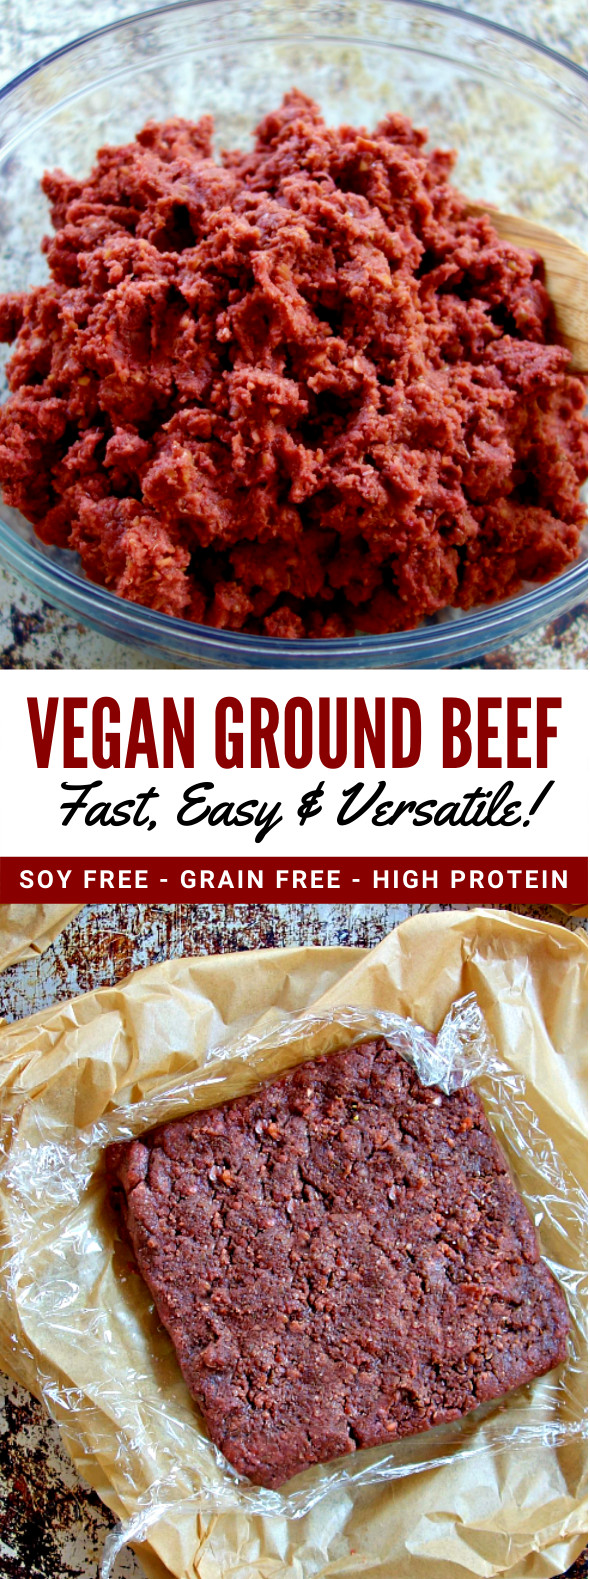 Grain Free Vegetarian Recipes
 VEGAN GROUND BEEF GRAIN FREE SOY FREE HIGH PROTEIN